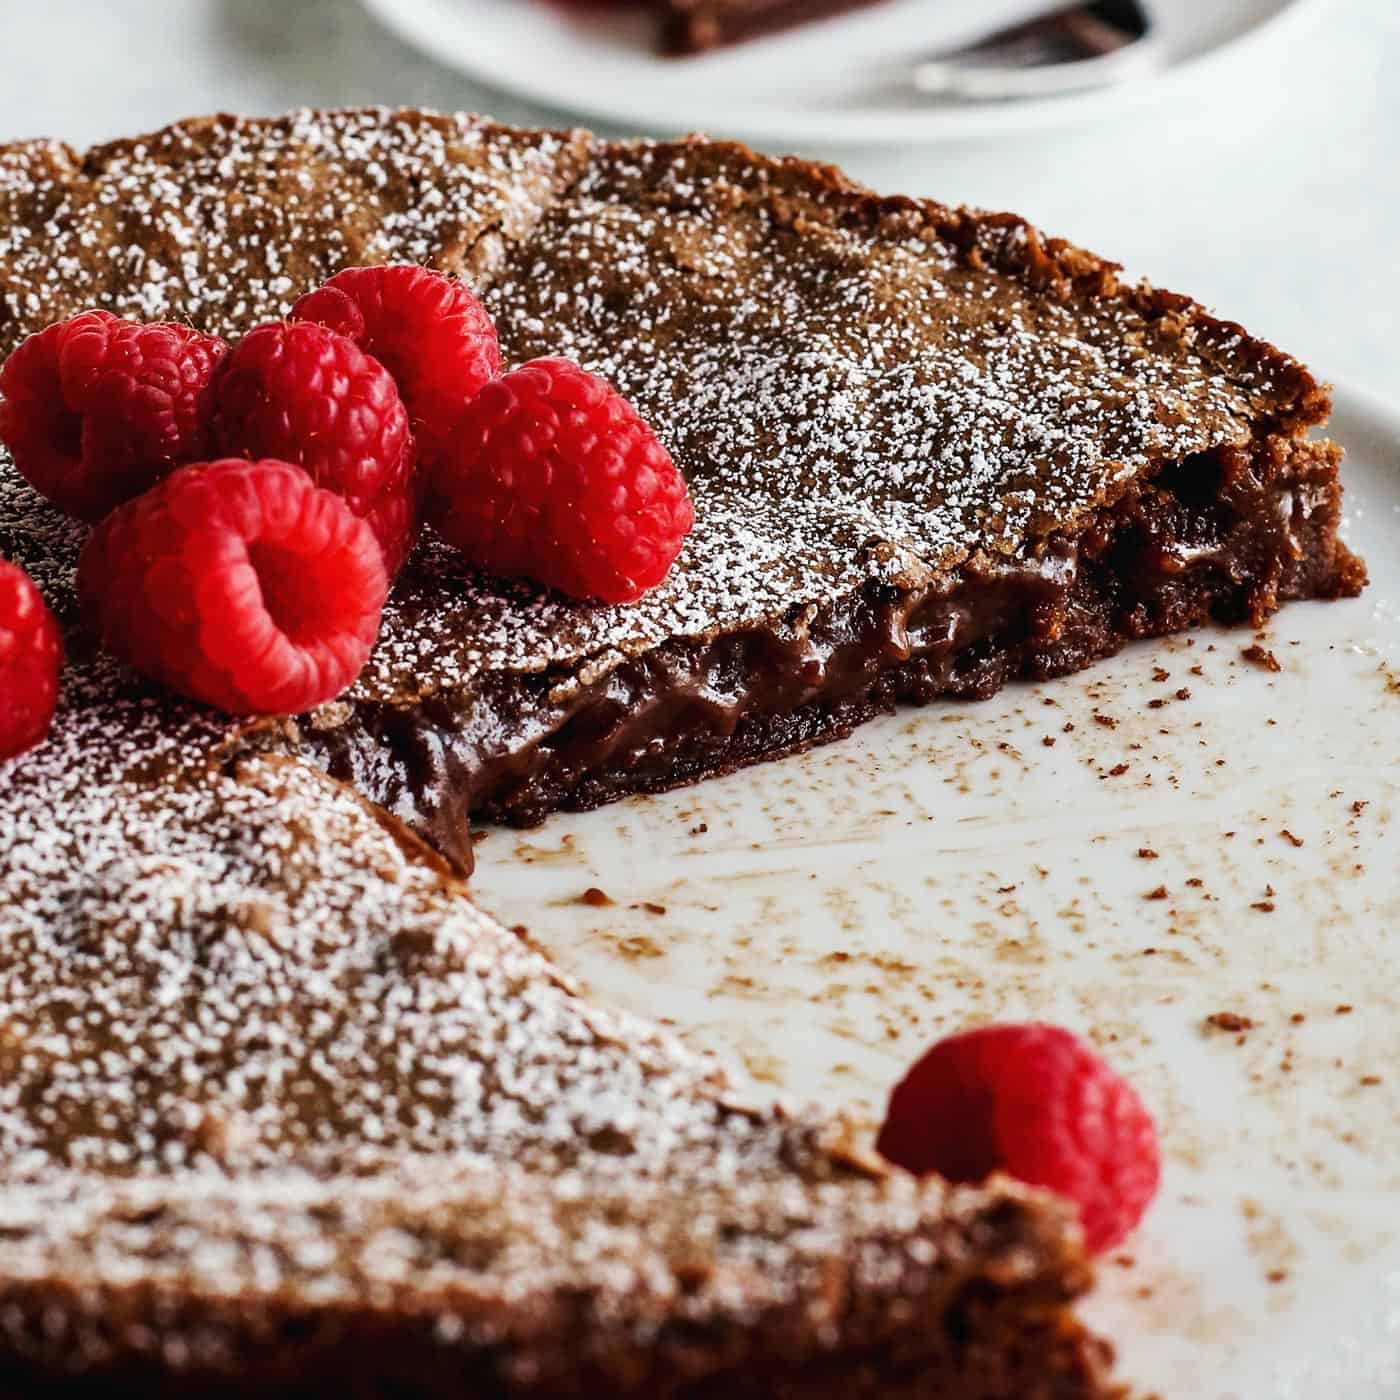 Swedish chocolate cake cut to reveal gooey, sticky interior.